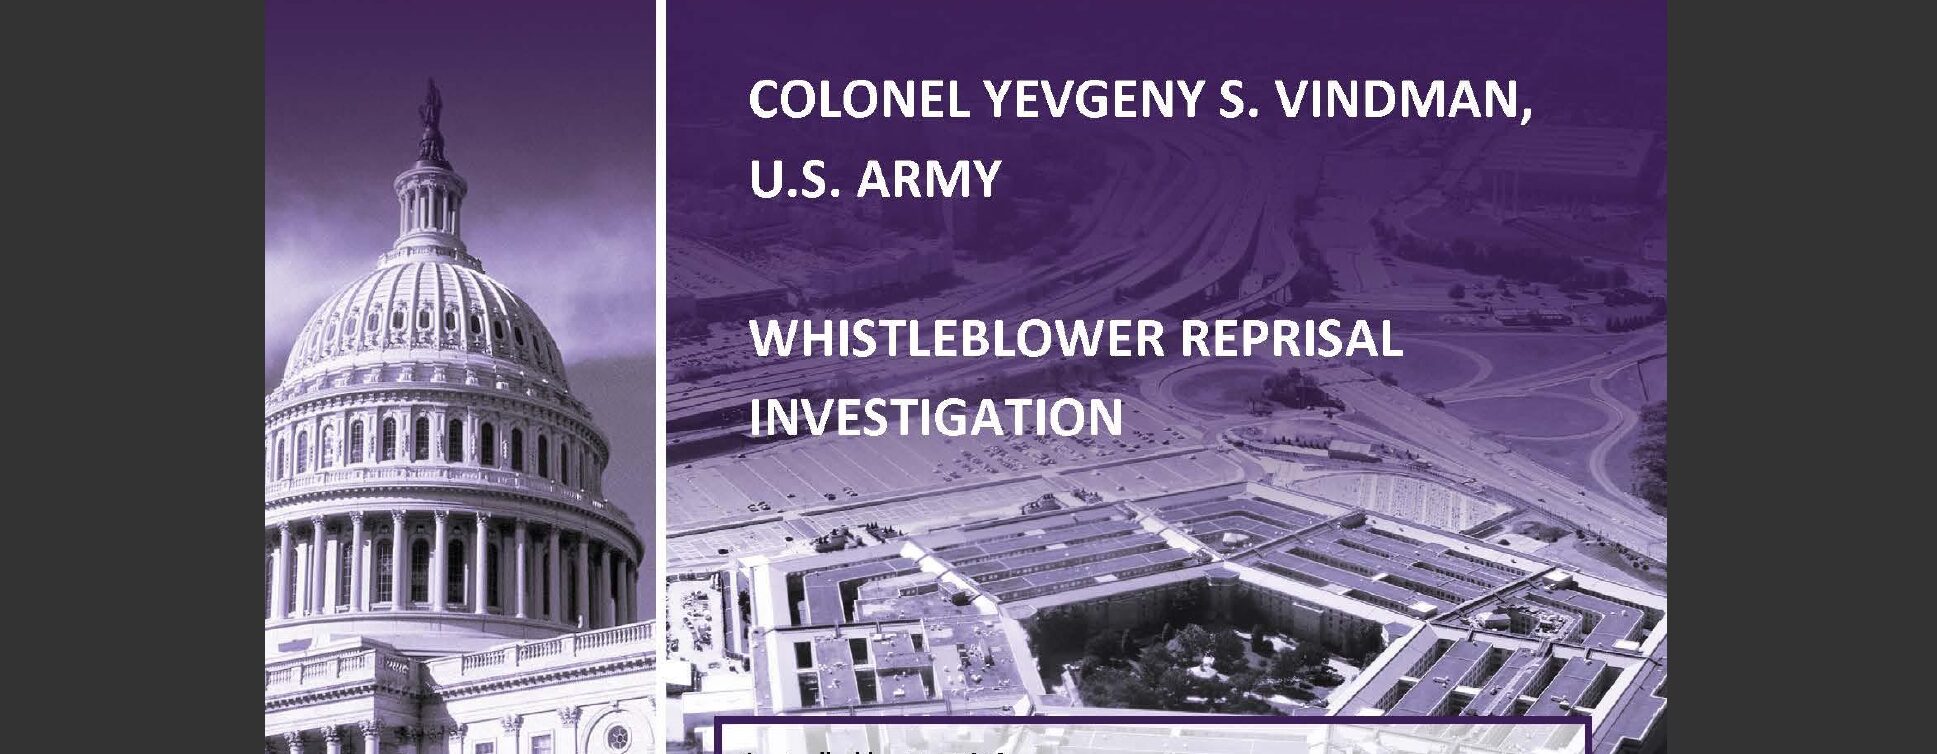 Whistleblower Reprisal Investigation: Colonel Yevgeny S. Vindman, U.S. Army (DODIG-2022-097)